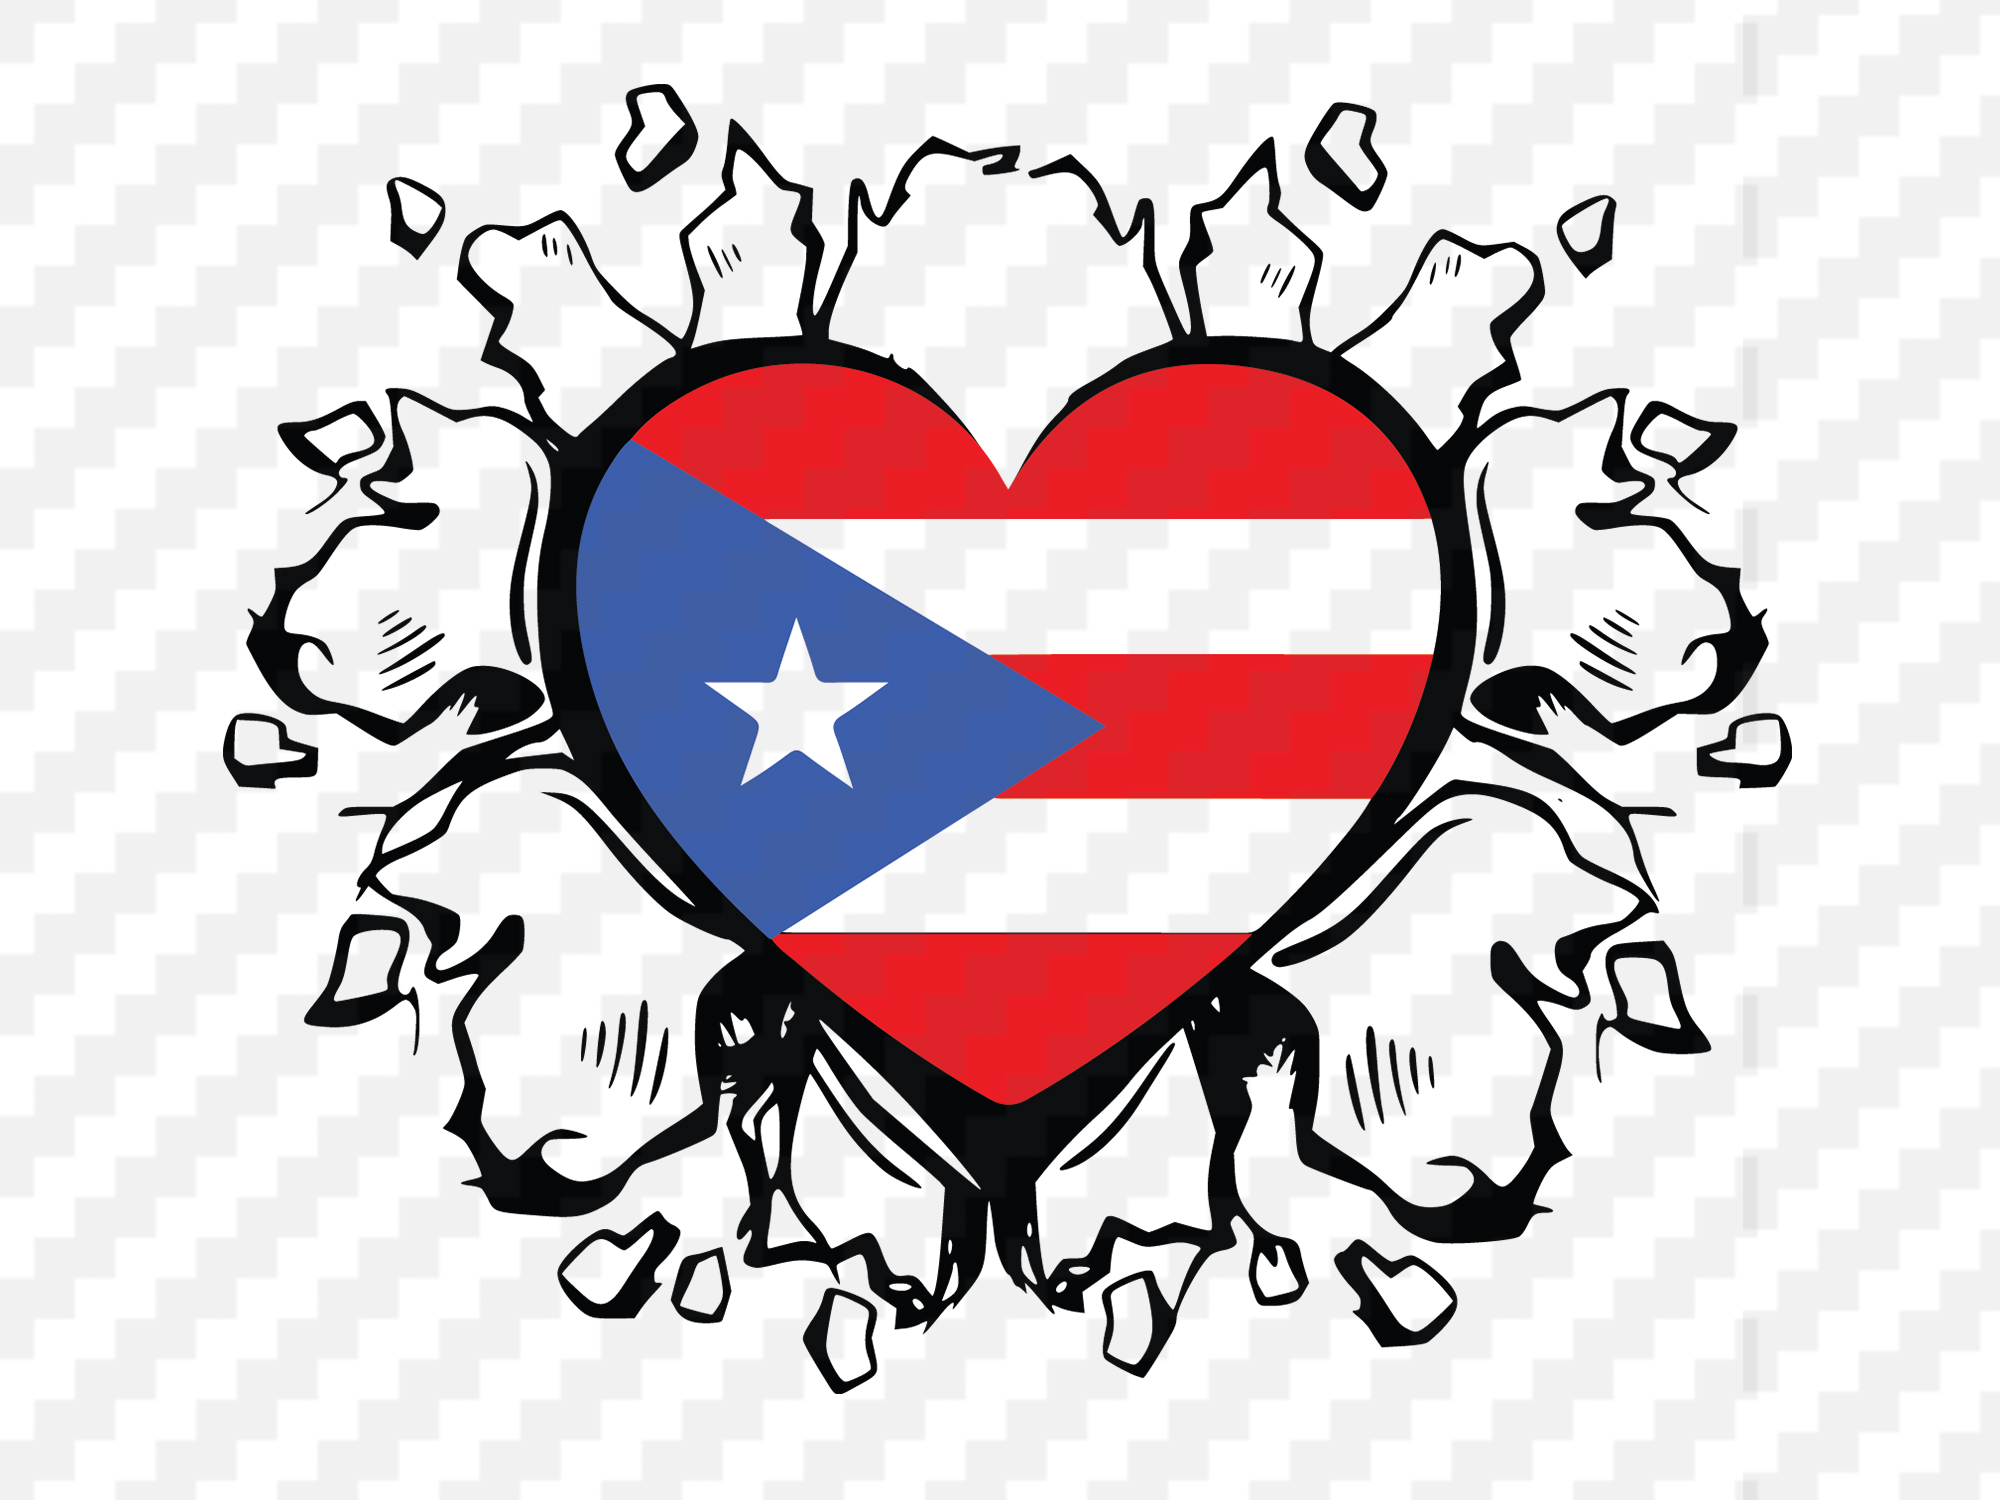 Puerto Rico Flag Printable